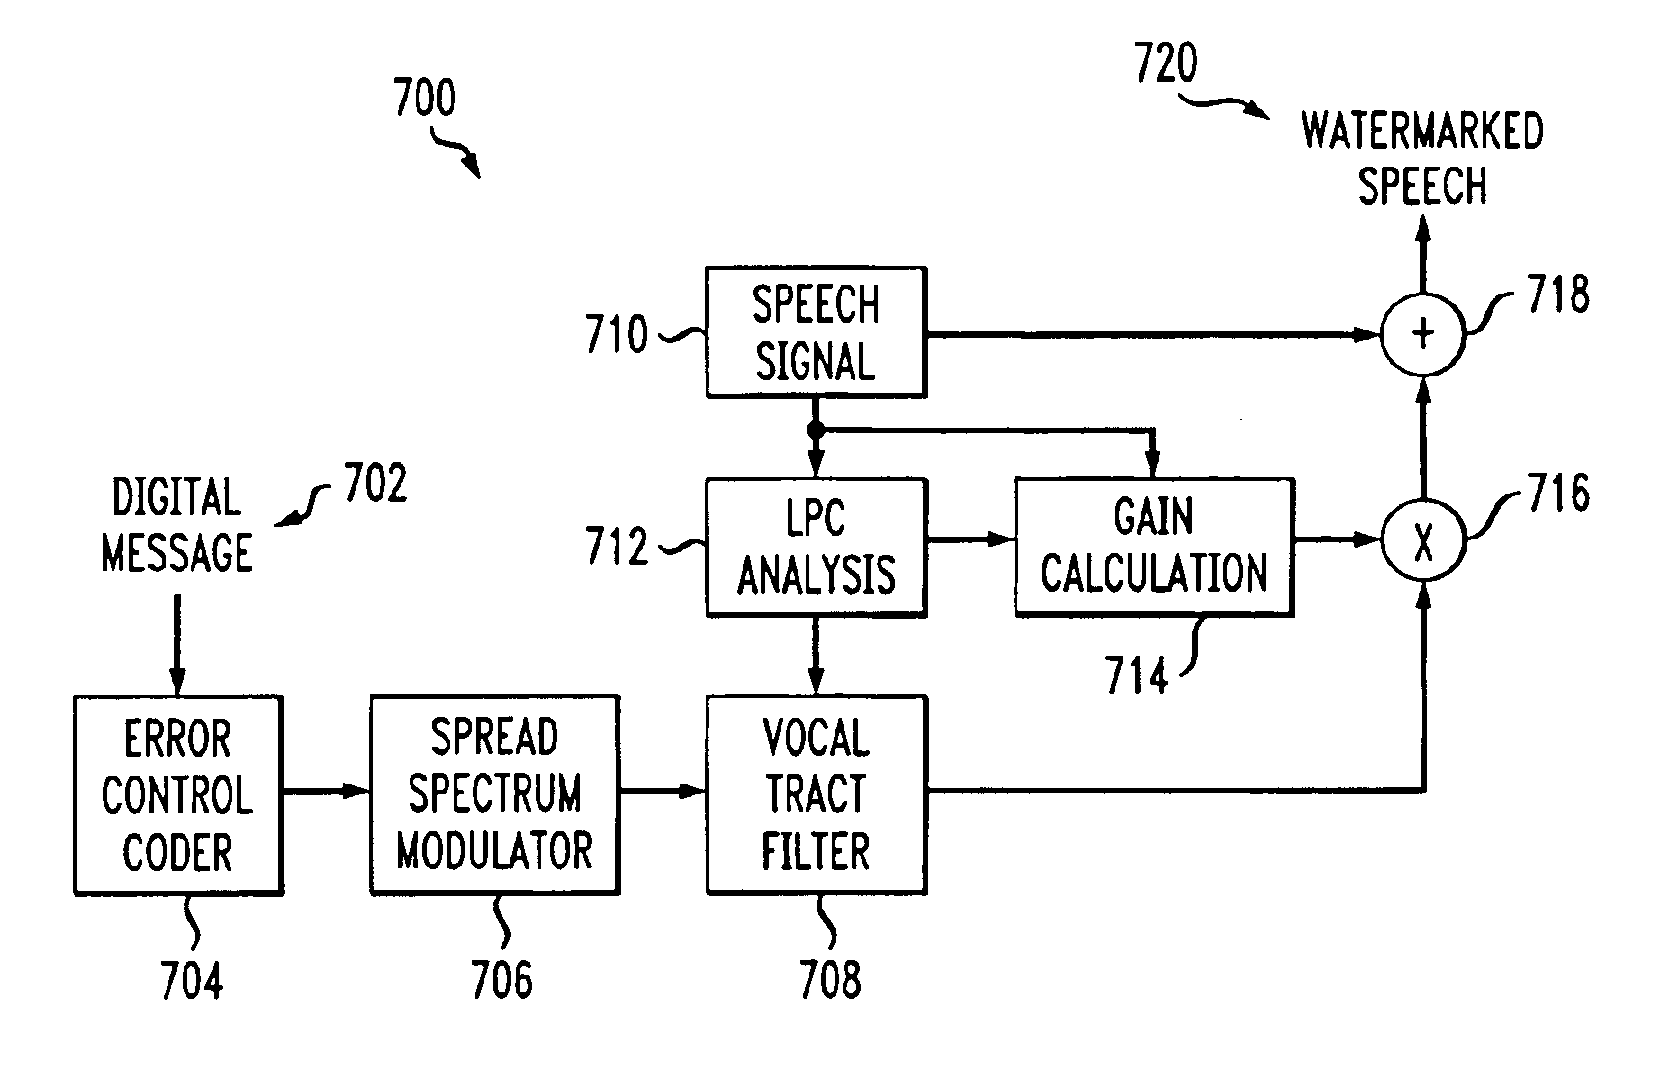 Spread spectrum signaling for speech watermarking